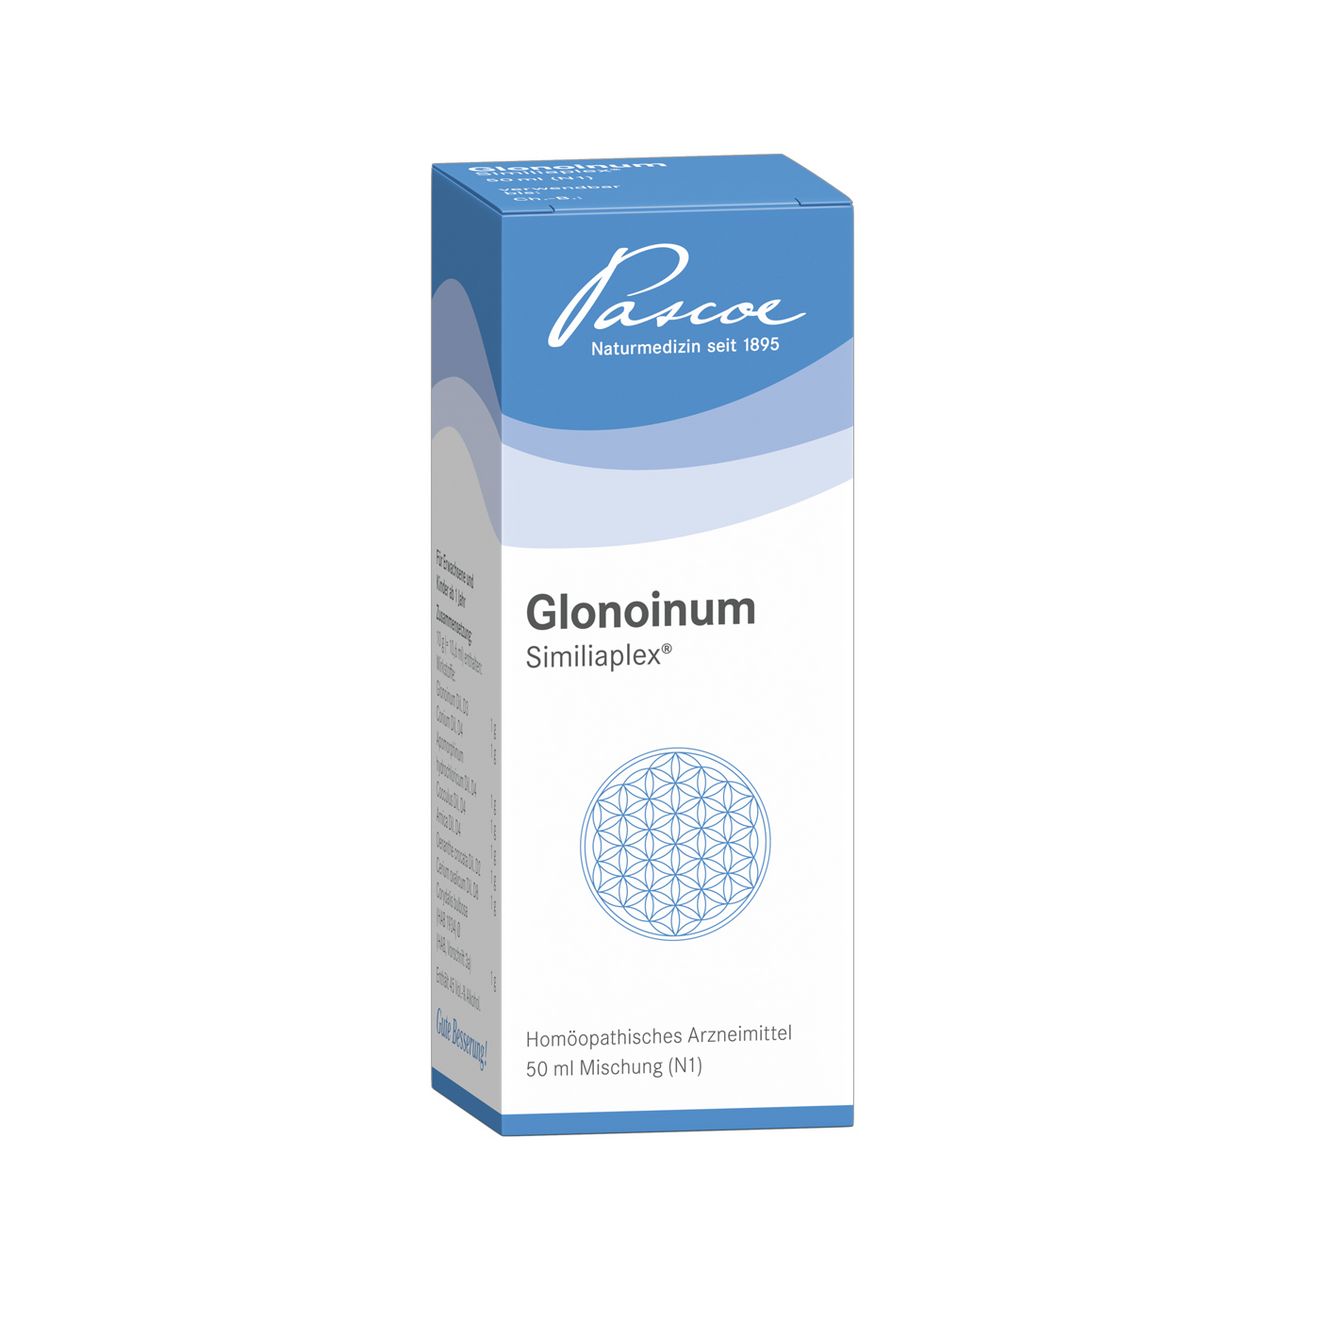 Glonoinum Similiaplex 50 ml Packshot PZN 03833781